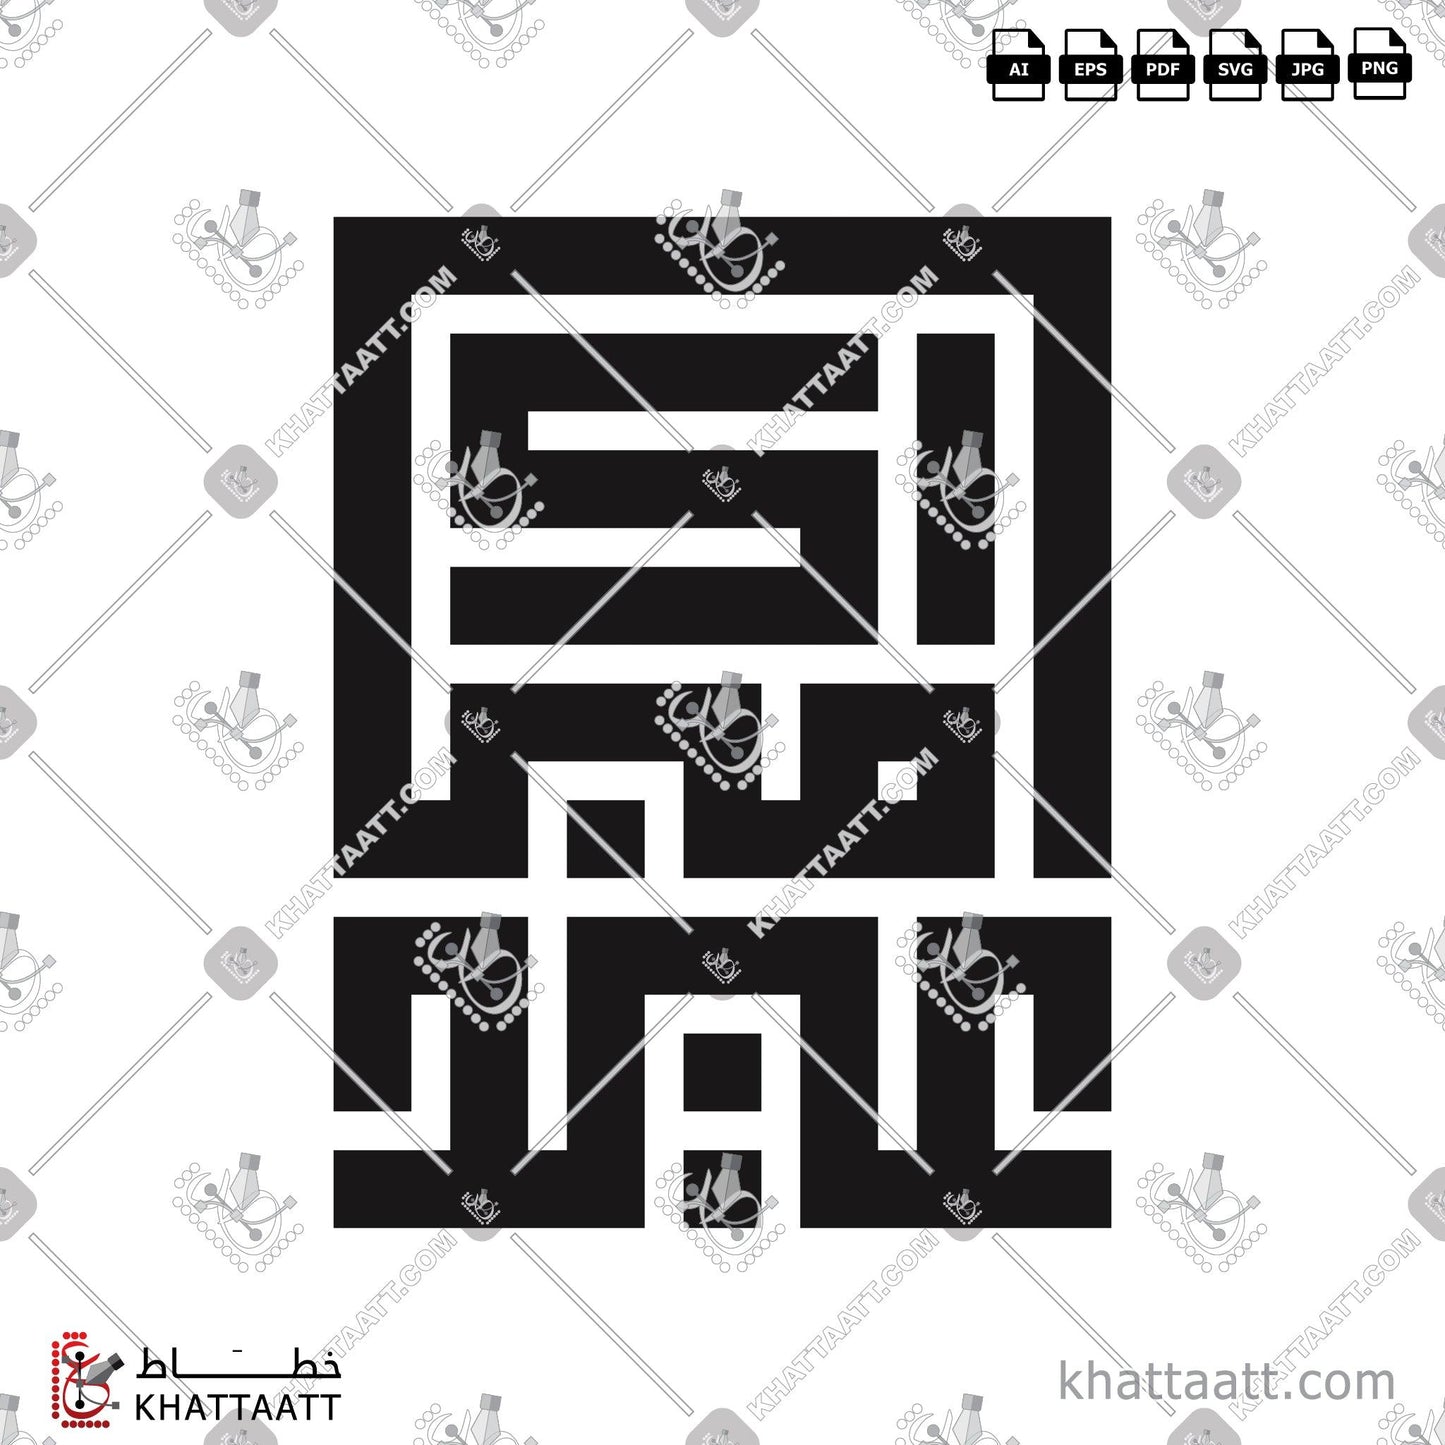 Download Arabic Calligraphy of Eid Mubarak - عيد مبارك in Kufi - الخط الكوفي in vector and .png